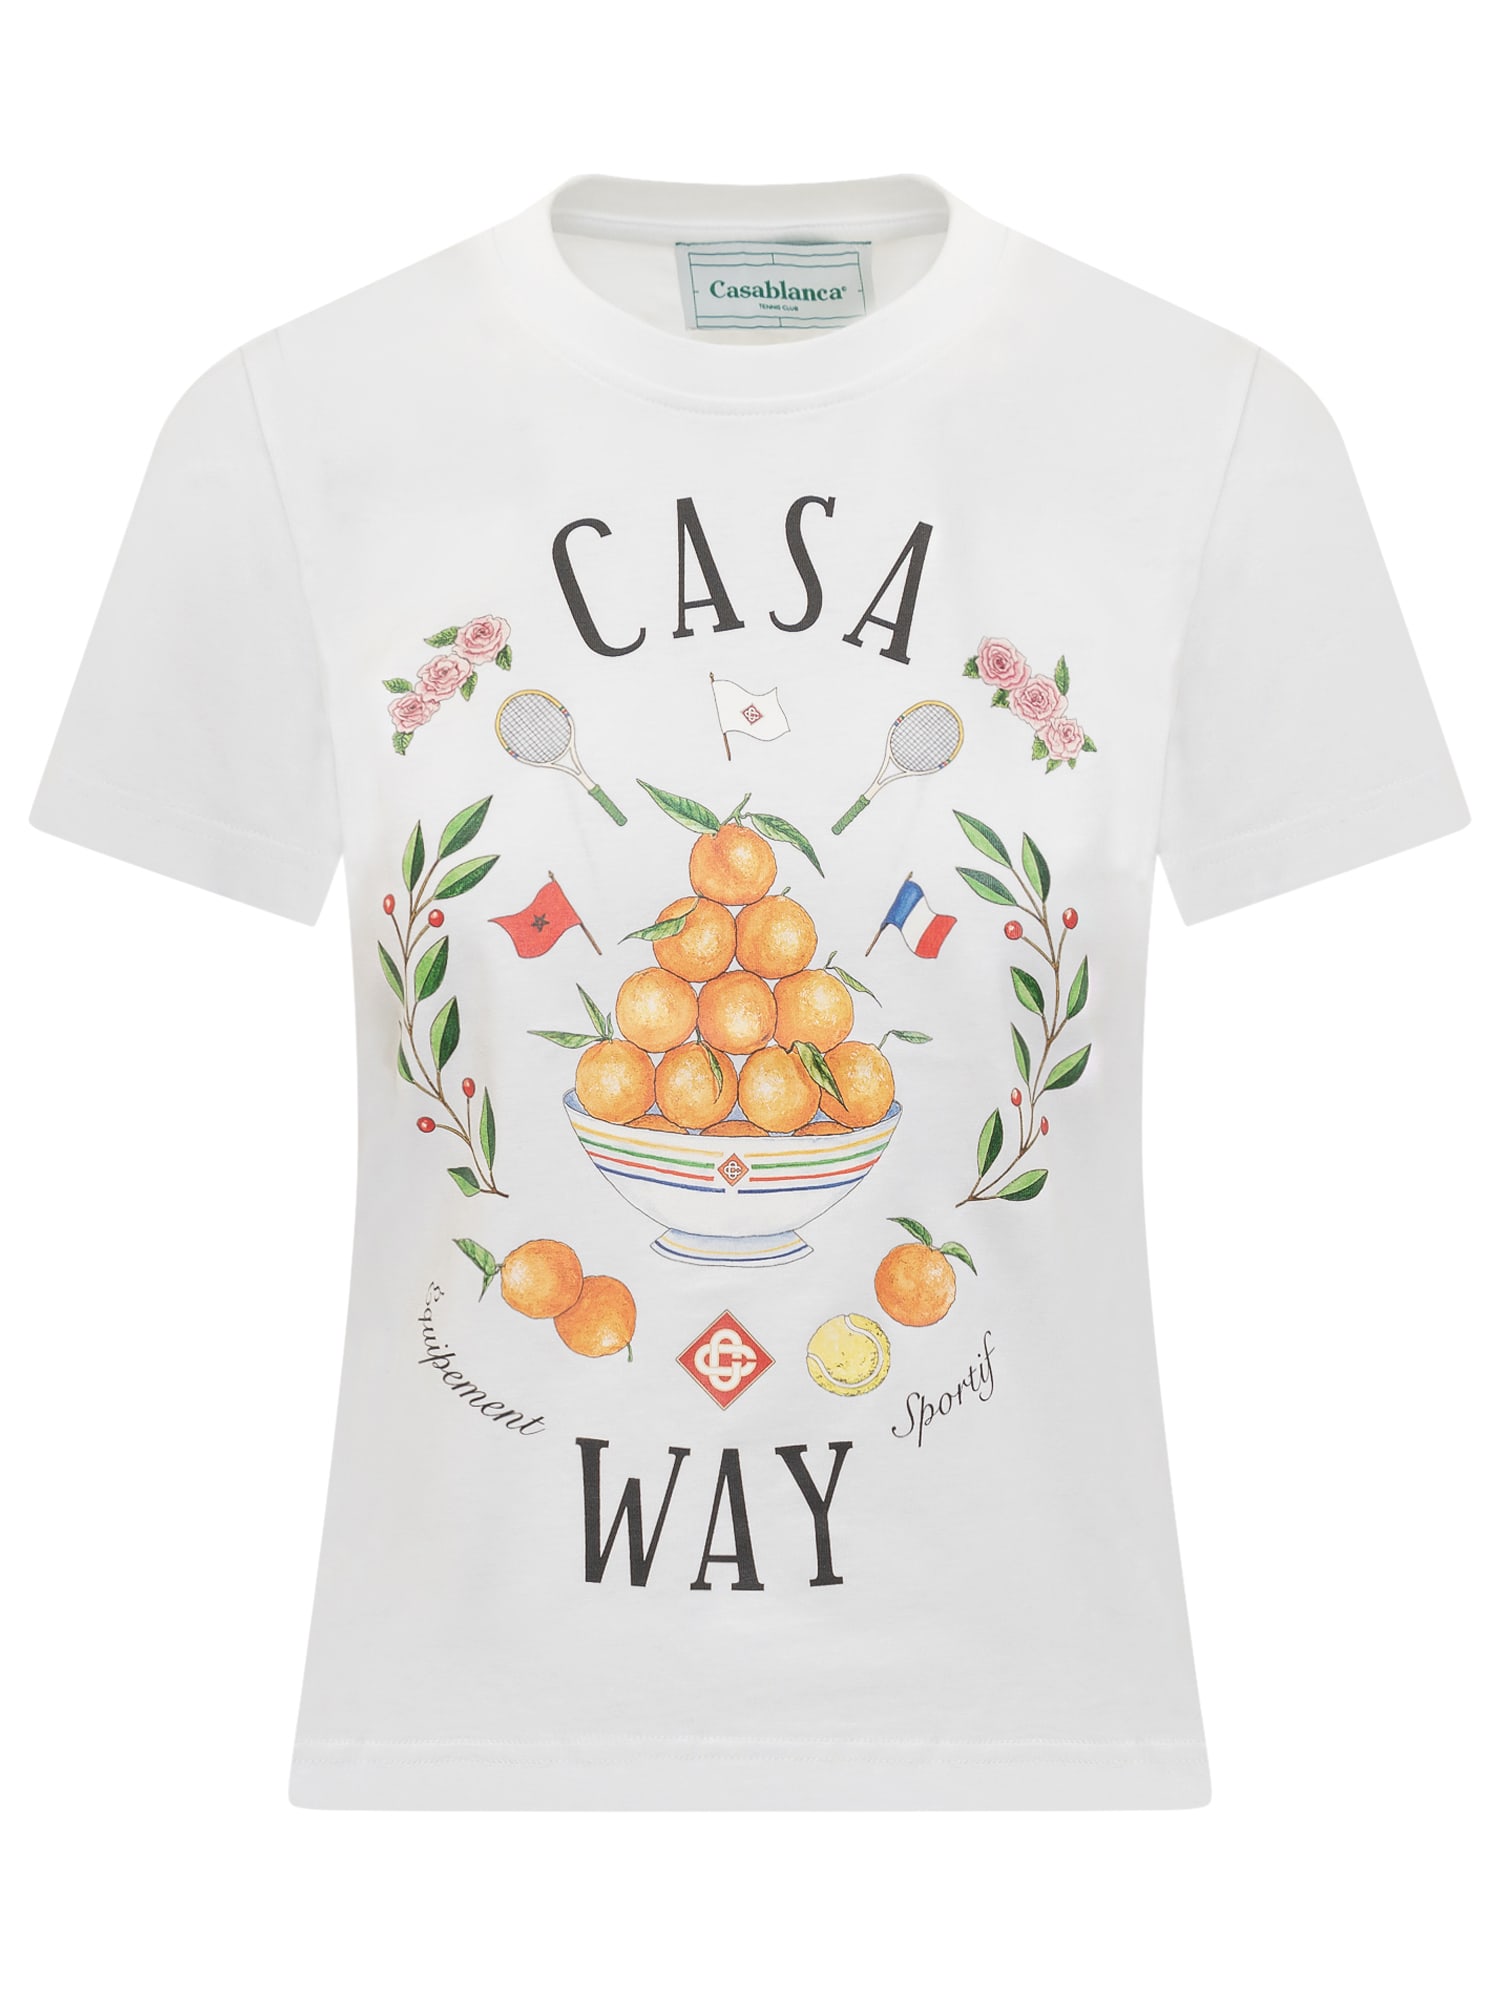 Casablanca Casa Way T-shirt